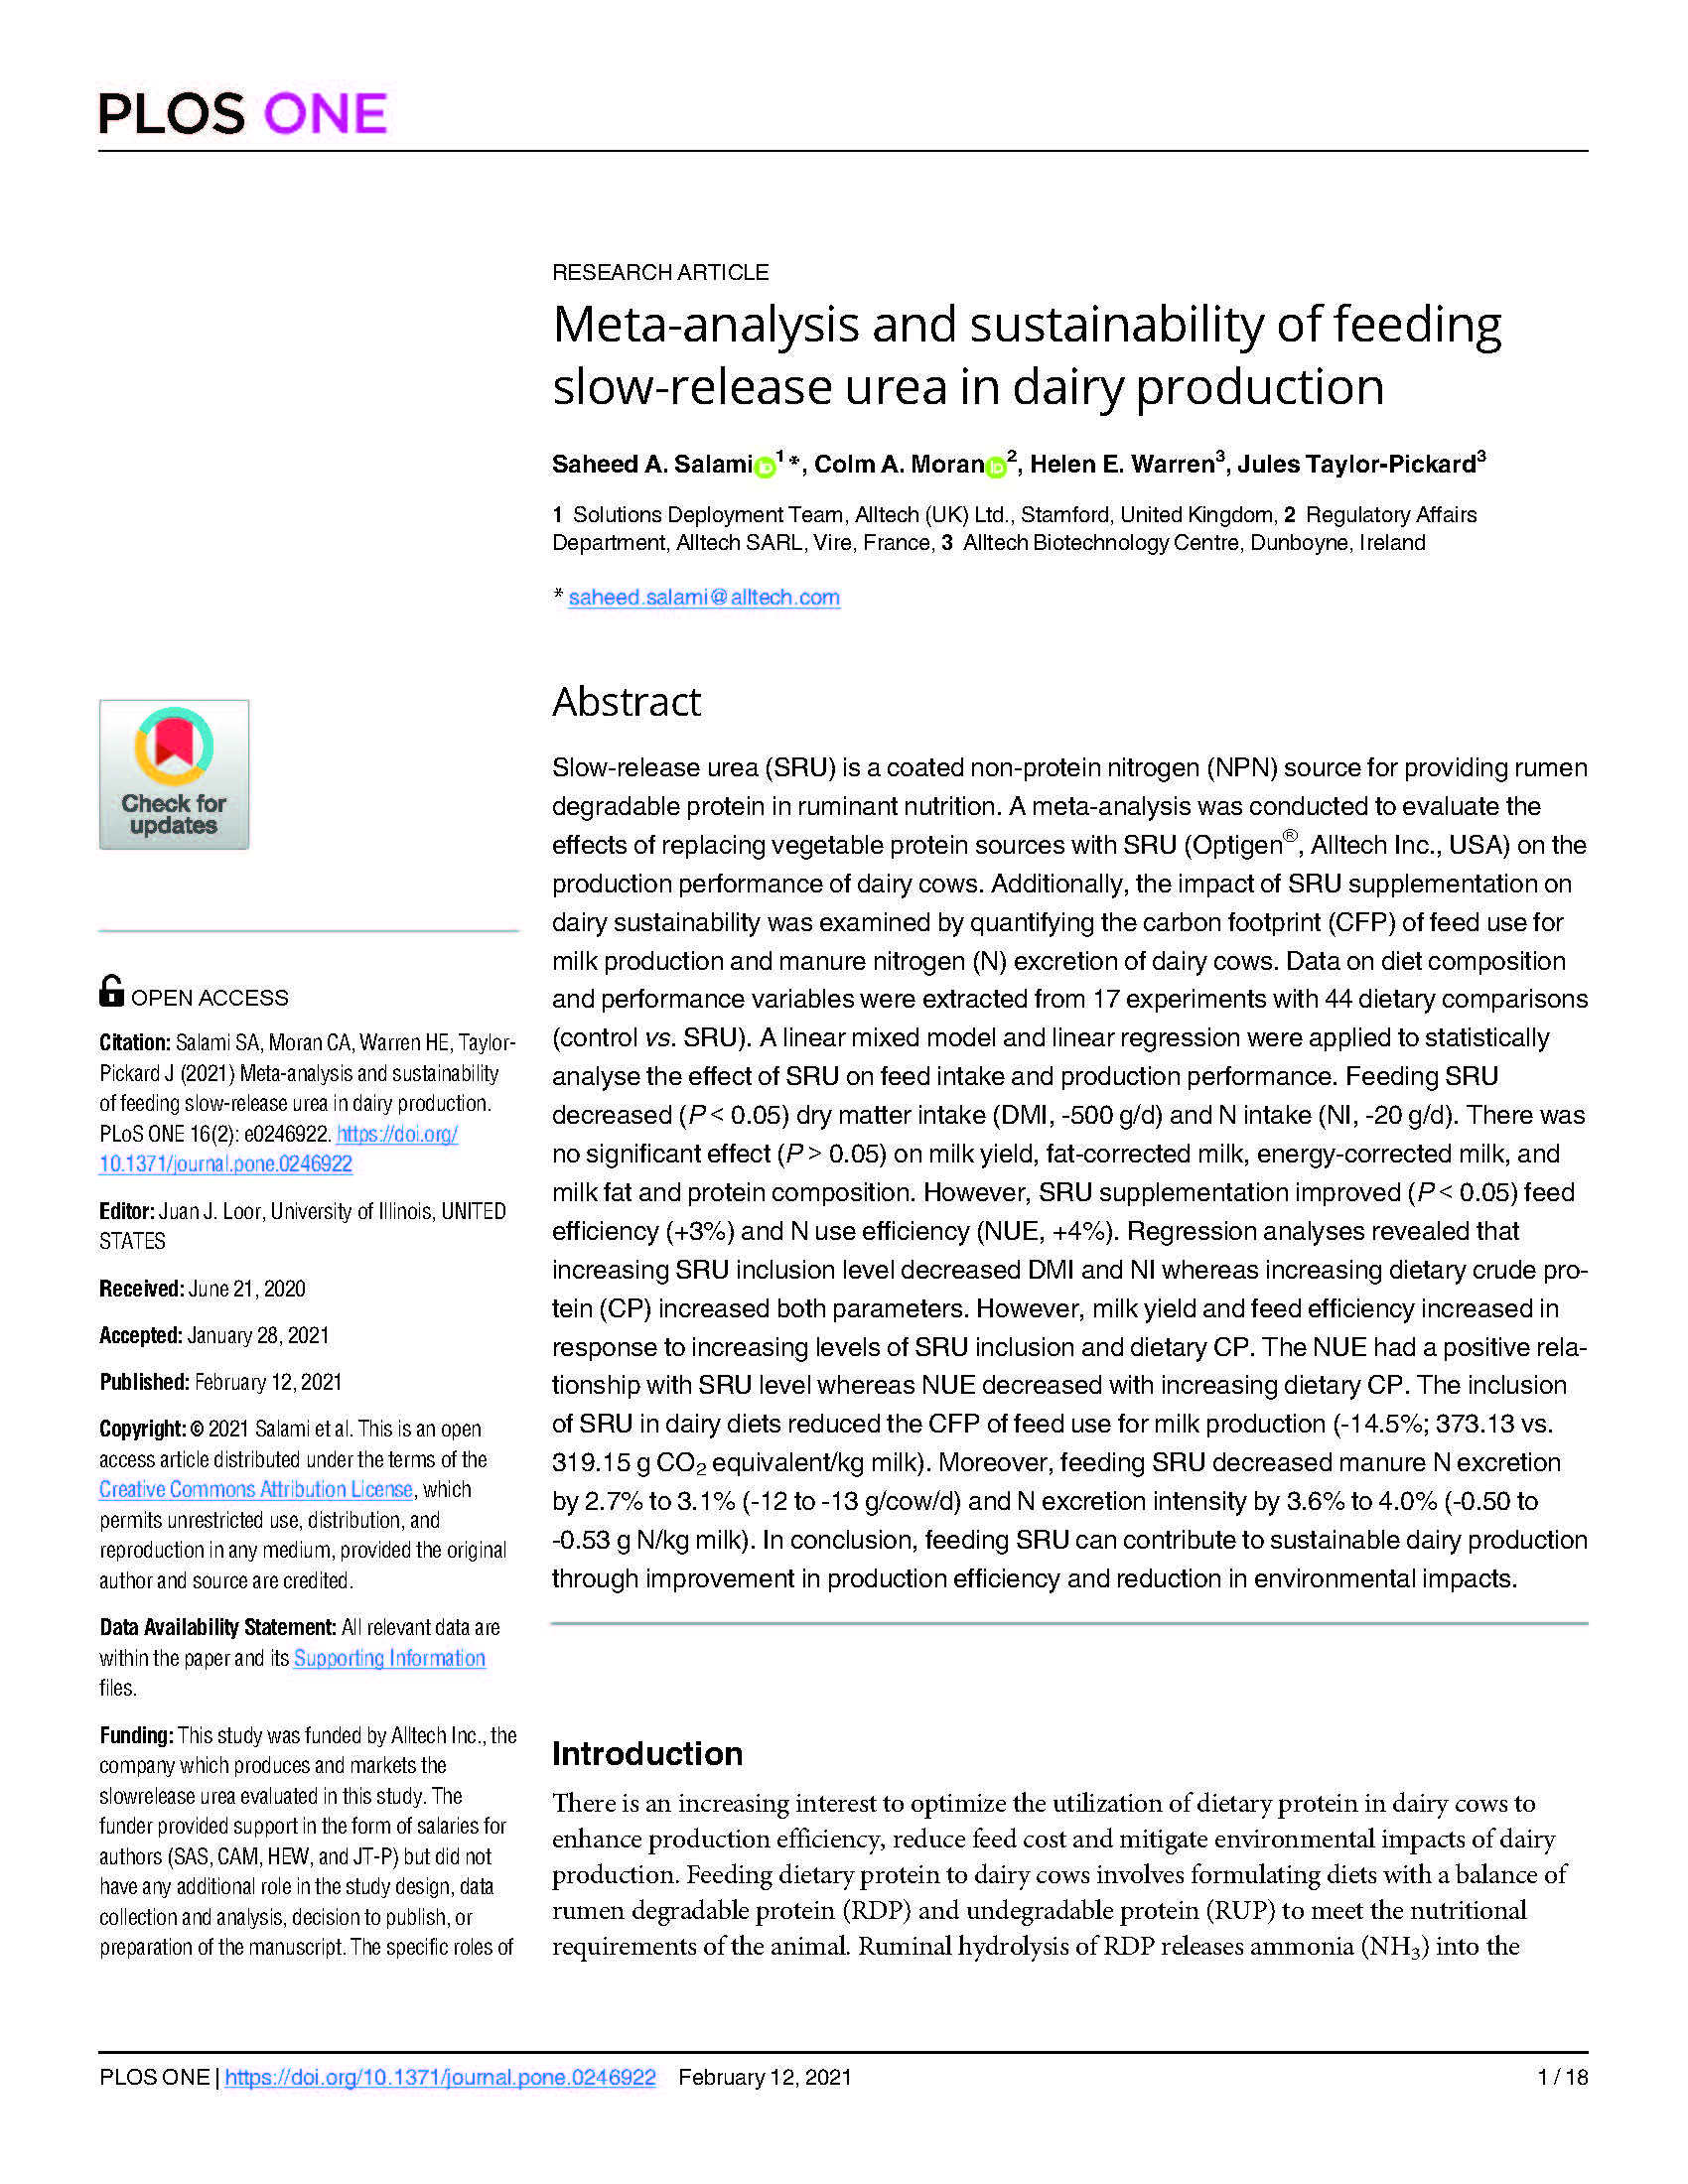 Salami et al. 2020 Meta-analysis and sustainability of feeding Optigen in dairy production.pdf thumbnail image